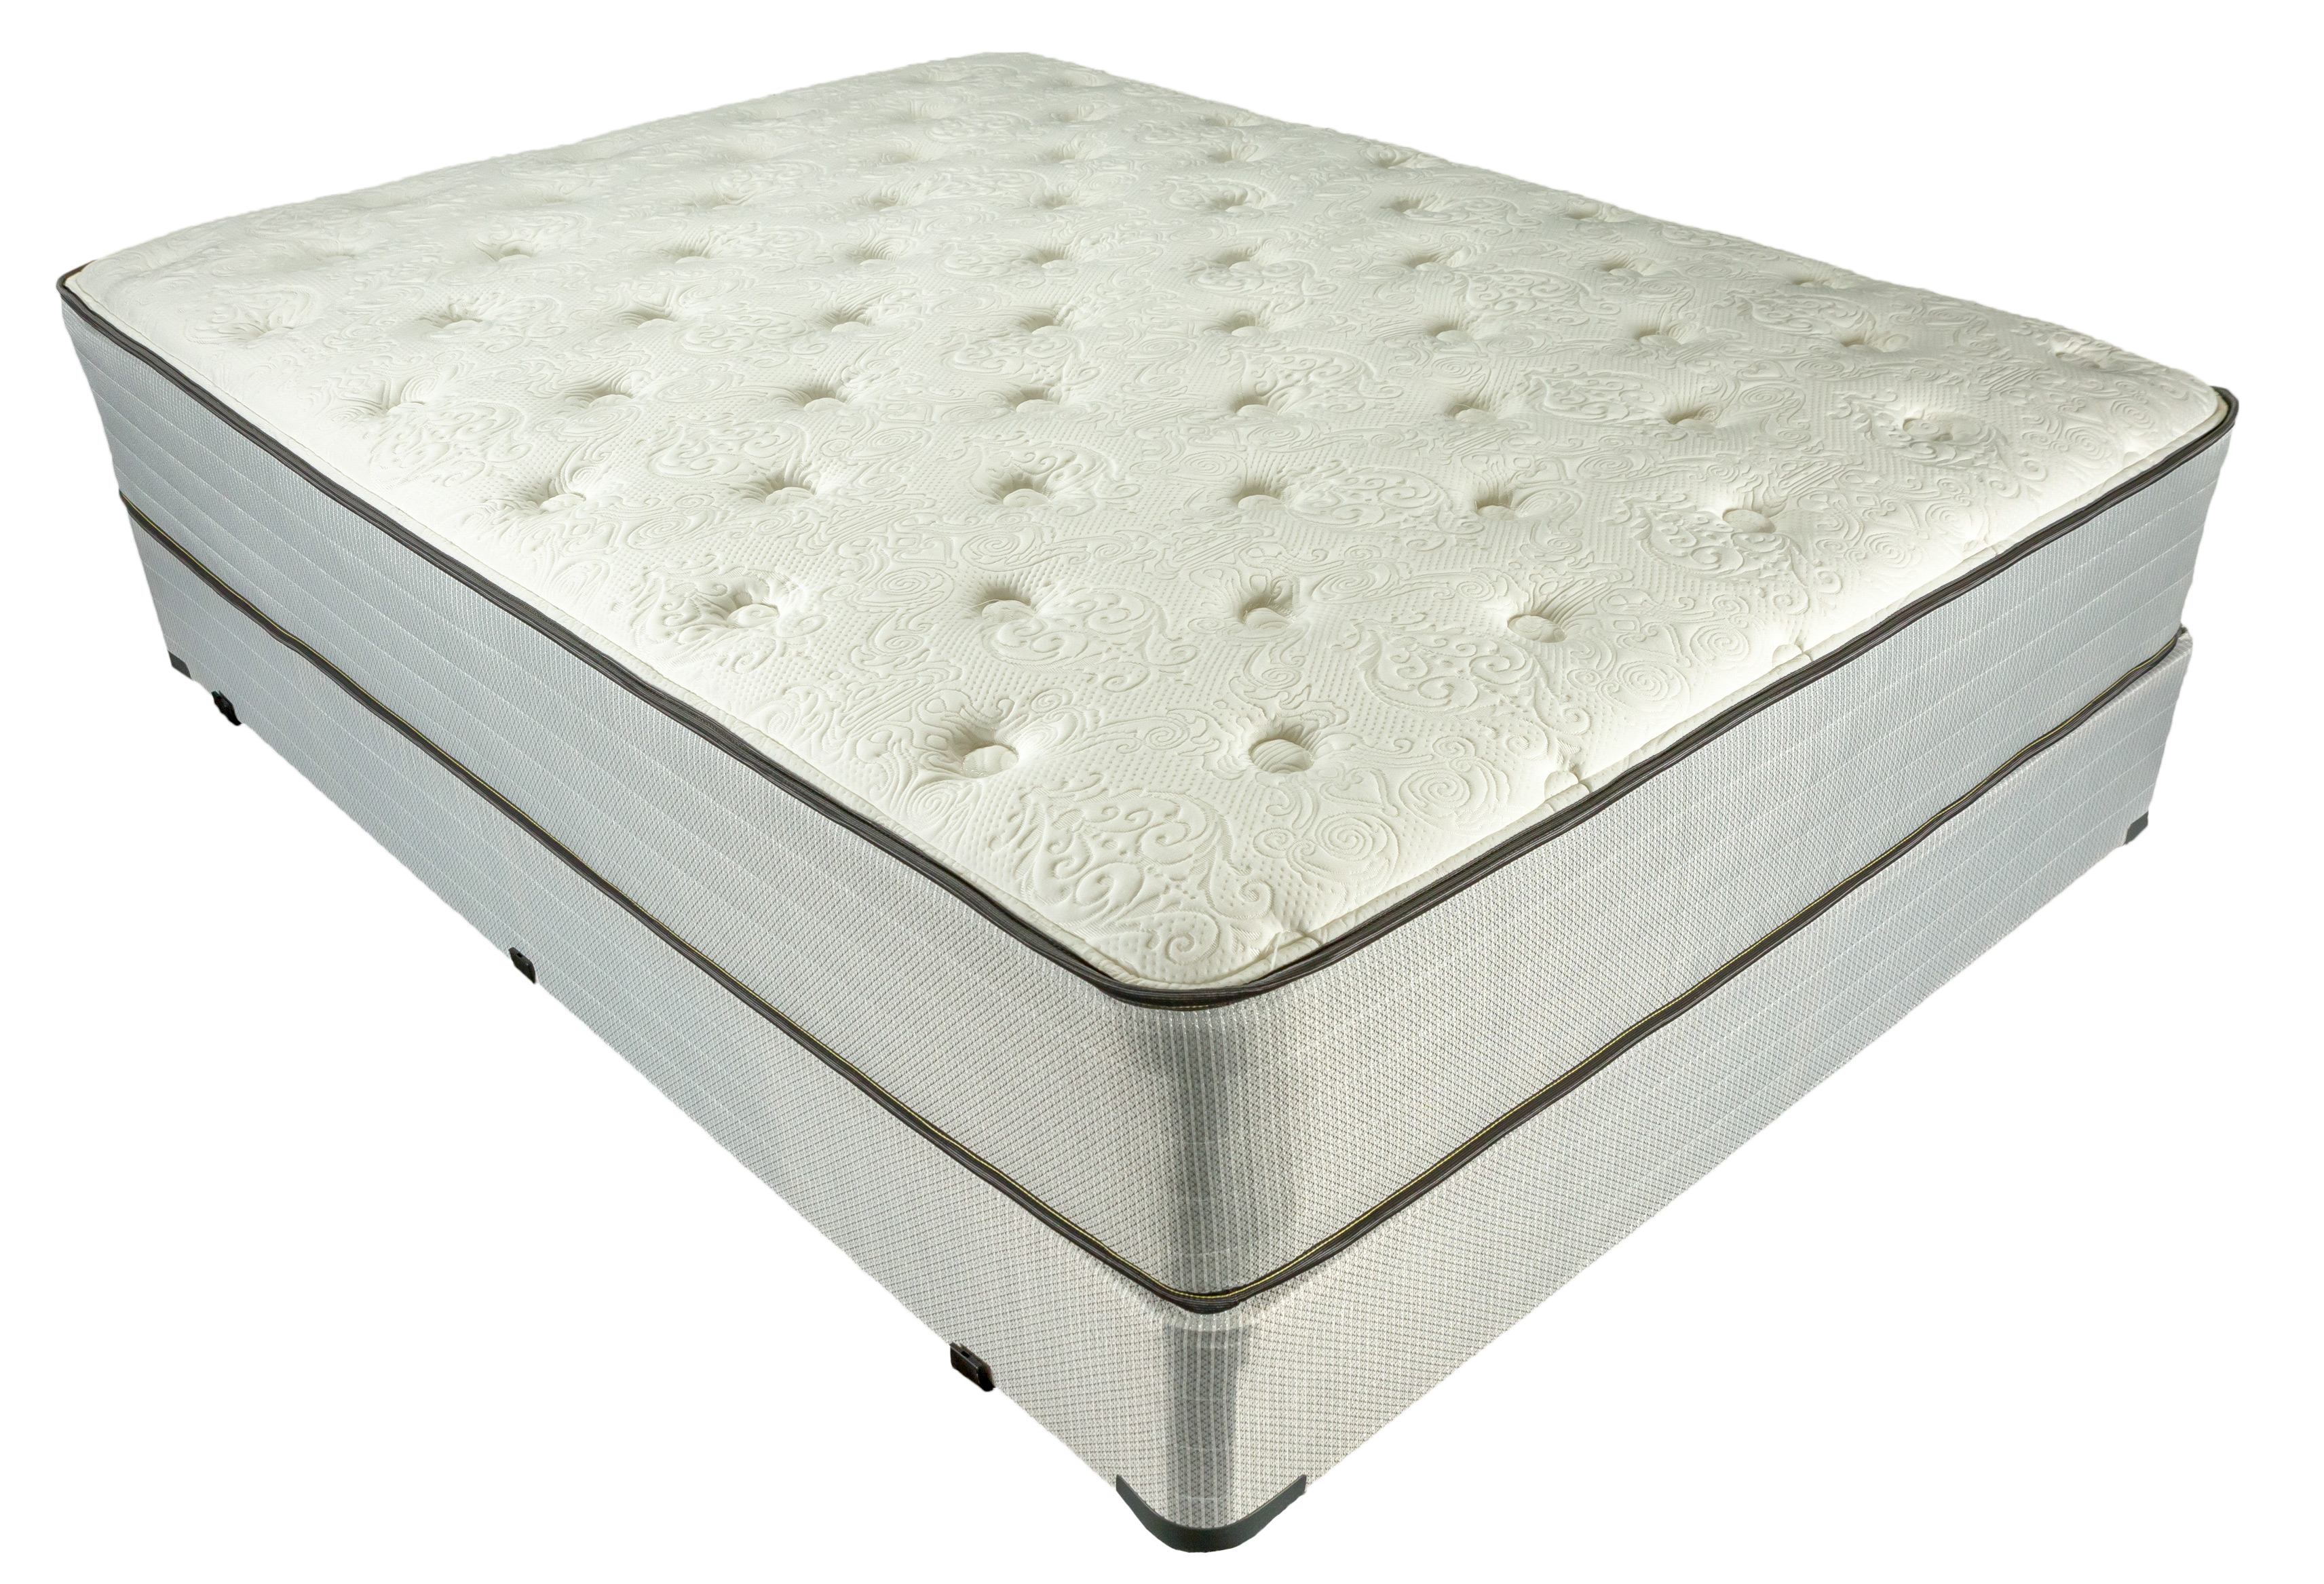 mckinley therapedic mattress review